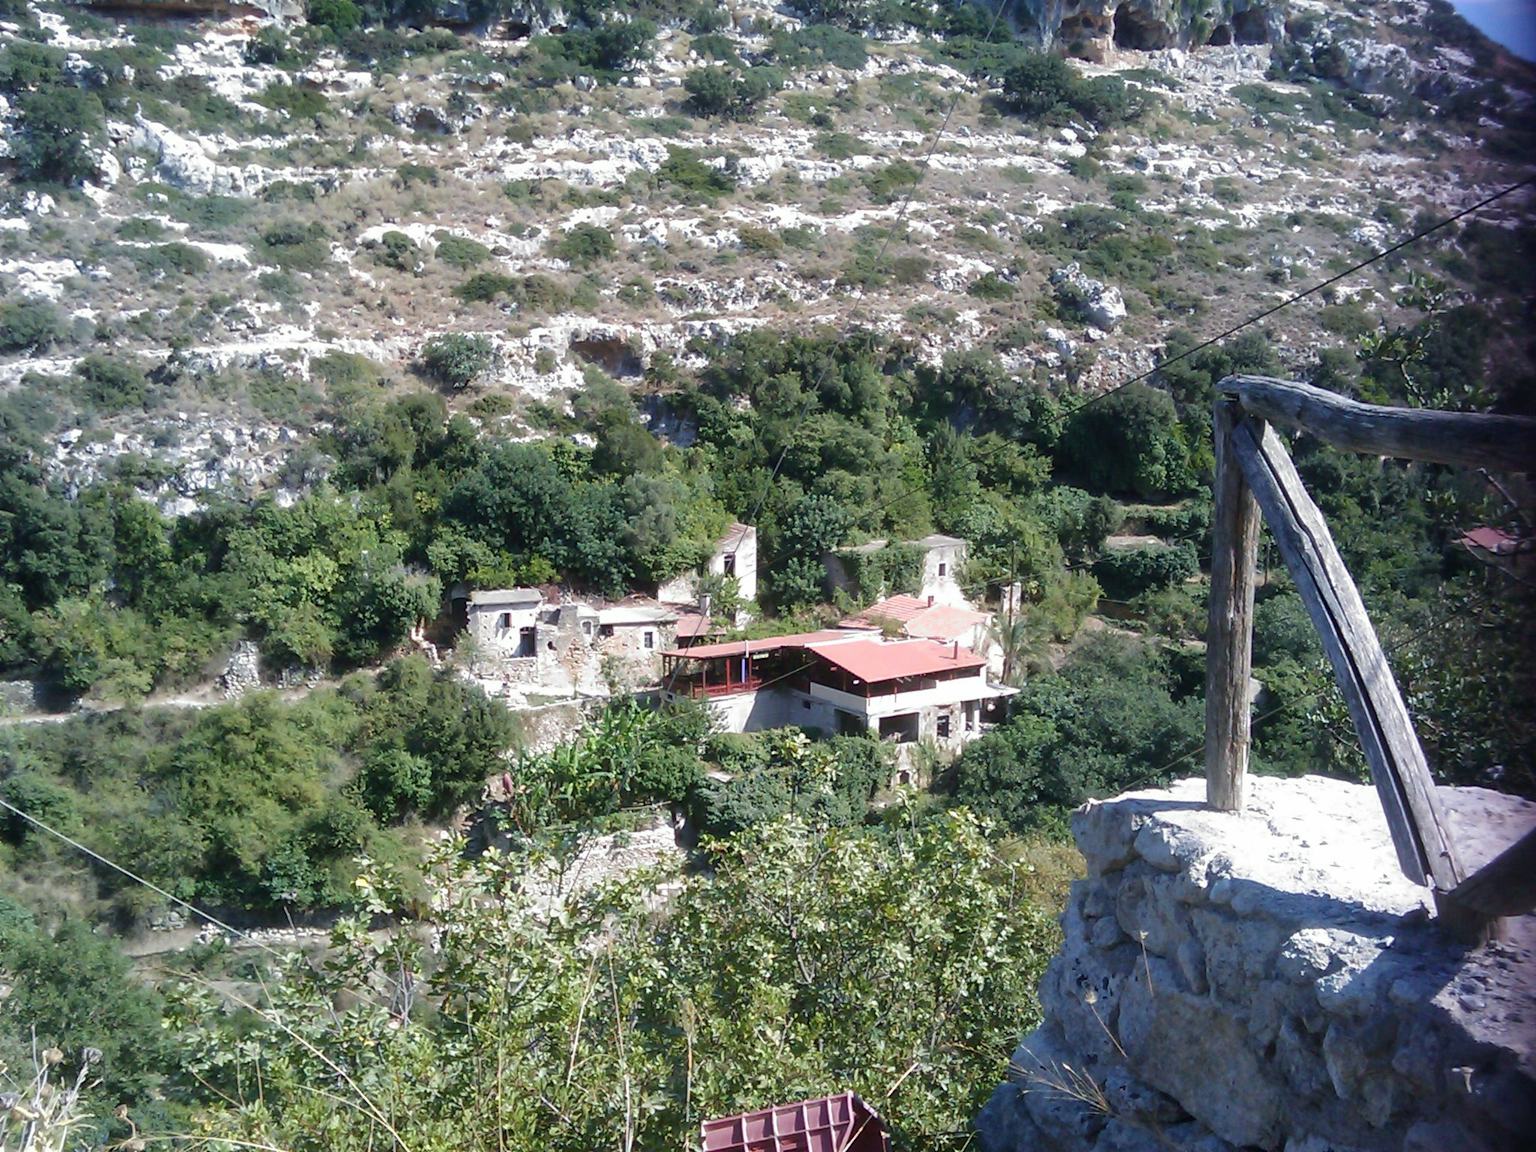 Myli: Exploring Hiking Trails towards Rethymno